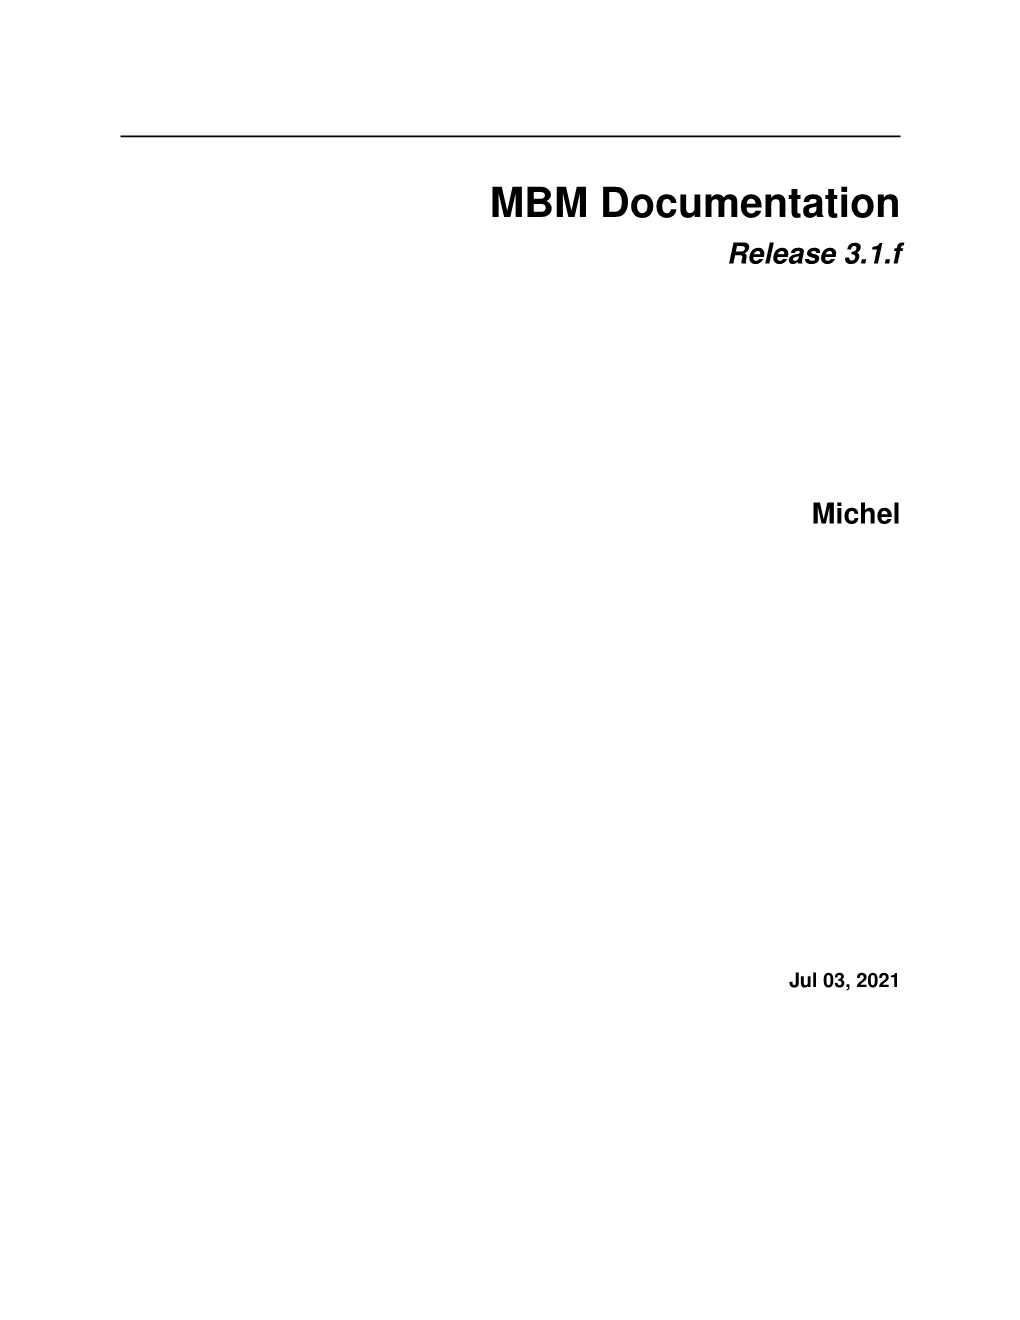 MBM Documentation Release 3.1.F